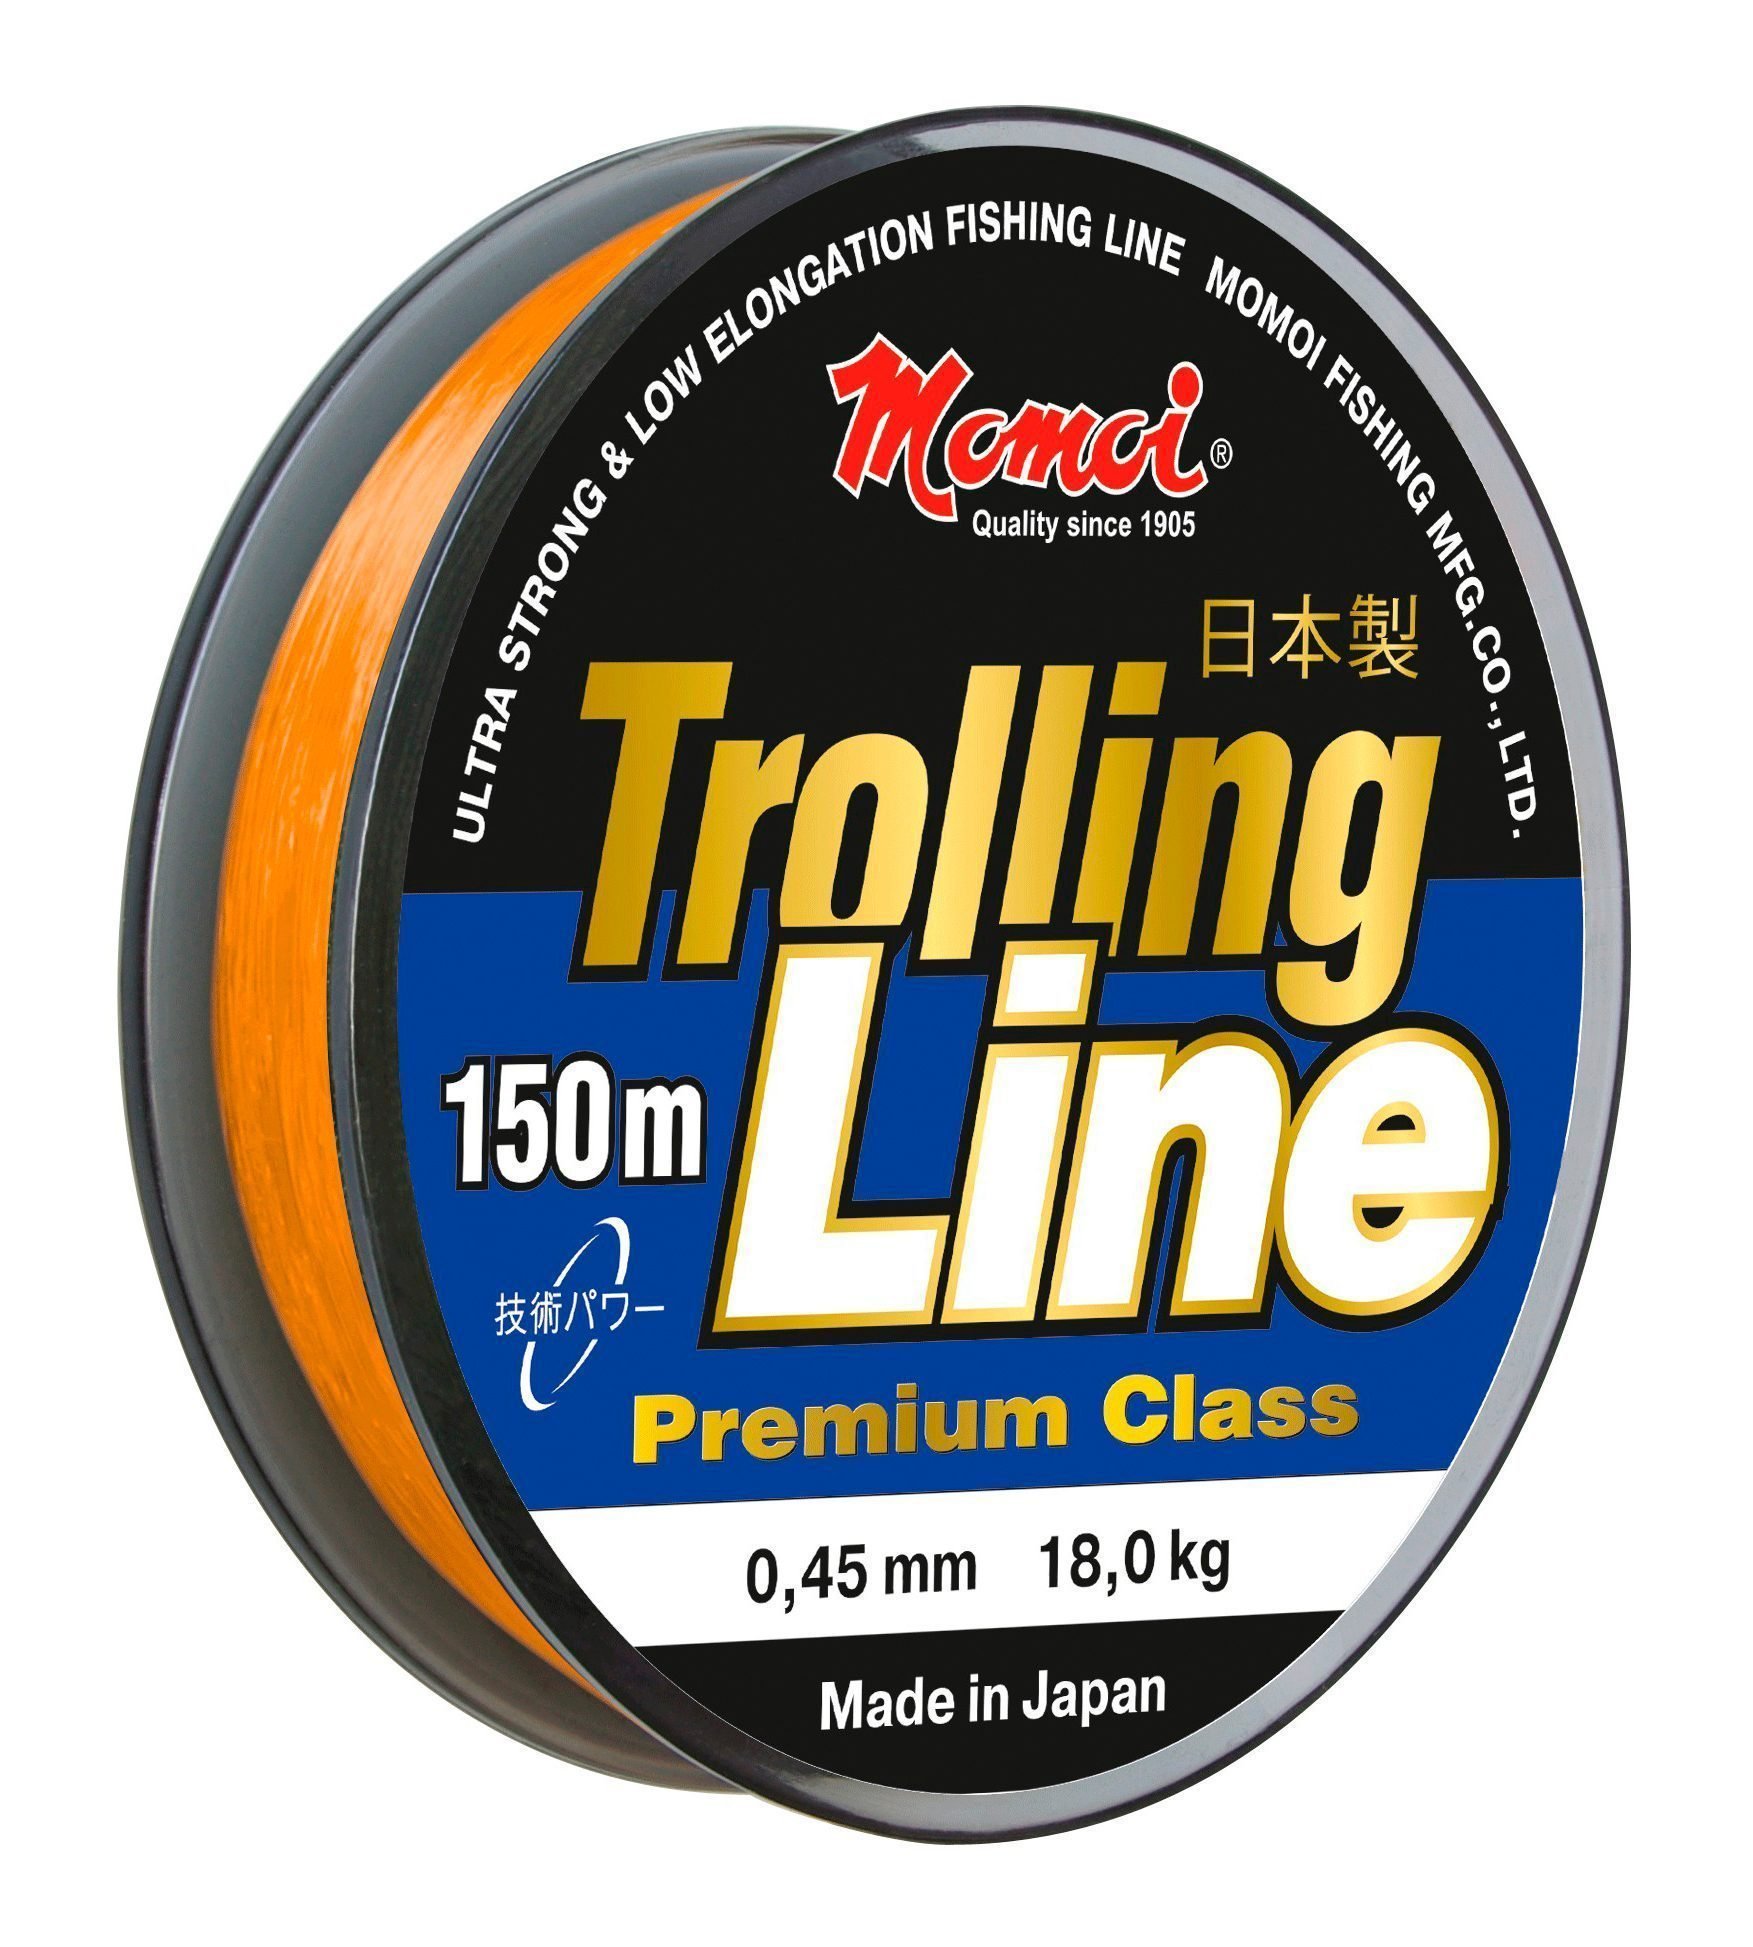 Леска Trolling Line  0, 40мм, 15, 0 кг, 150  м,  оранжевая (шт.)